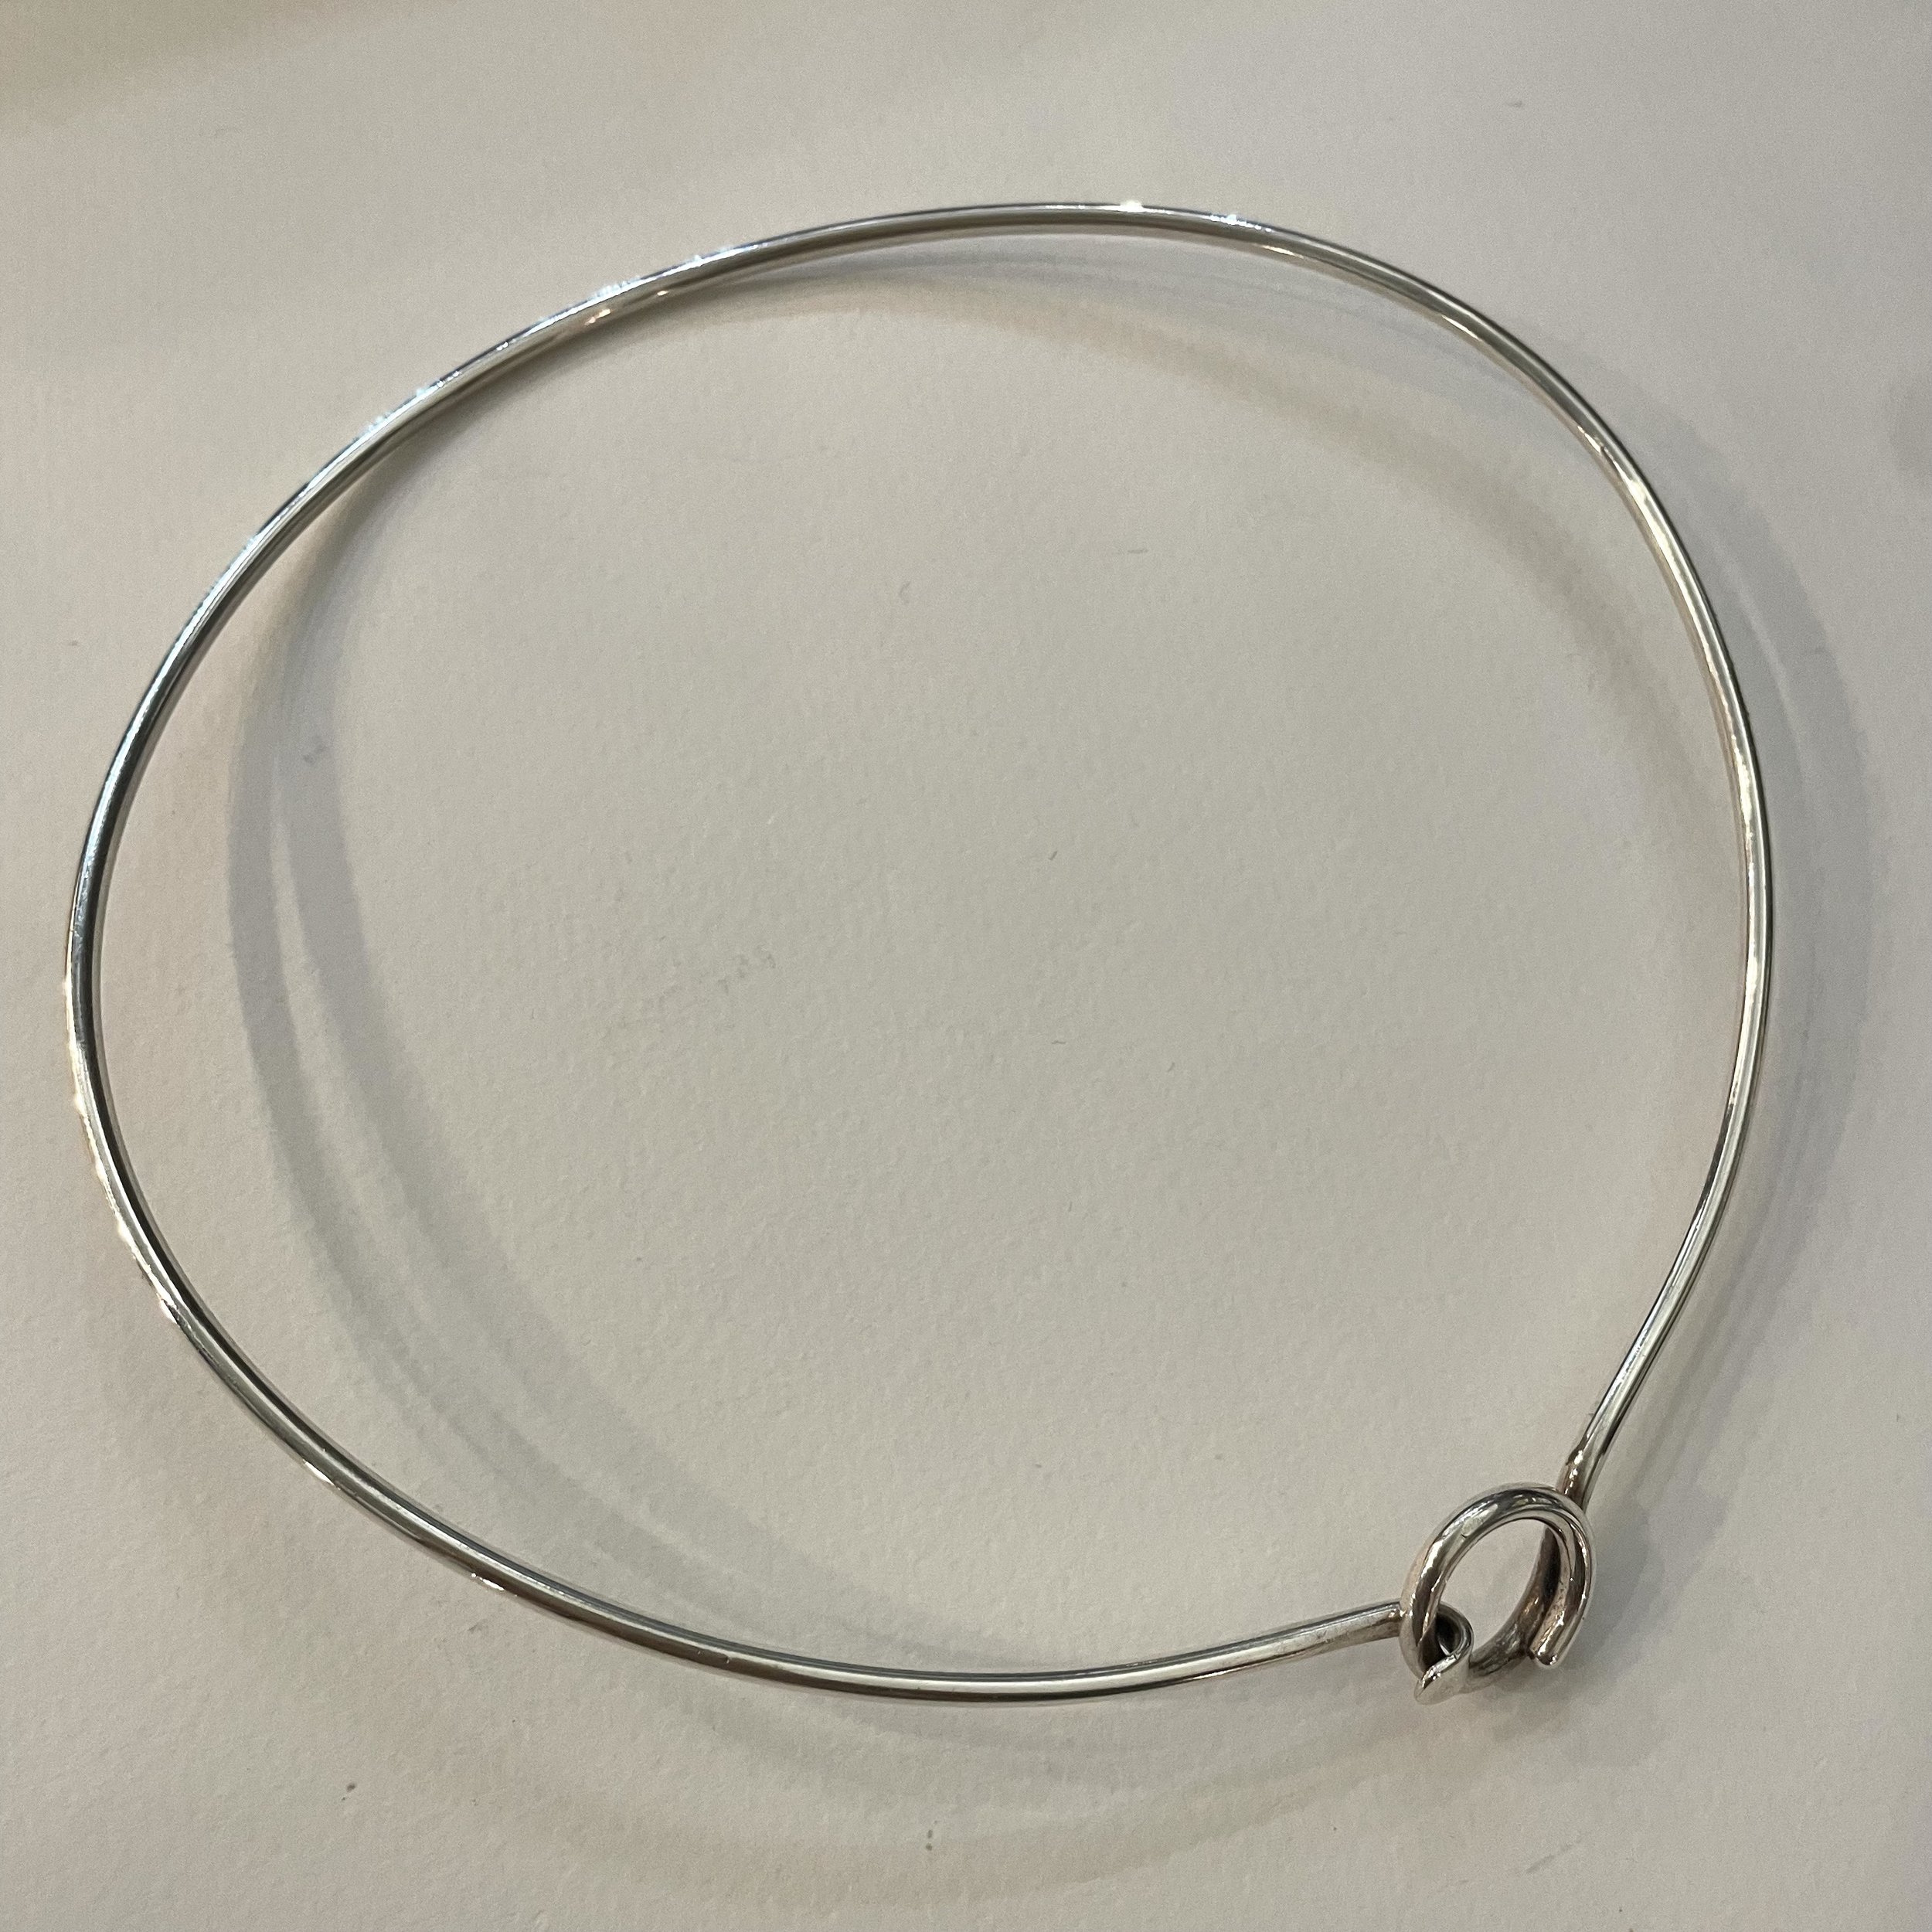 Viking king / jarl twisted torque, handmade neck ring, nickel-silver | eBay